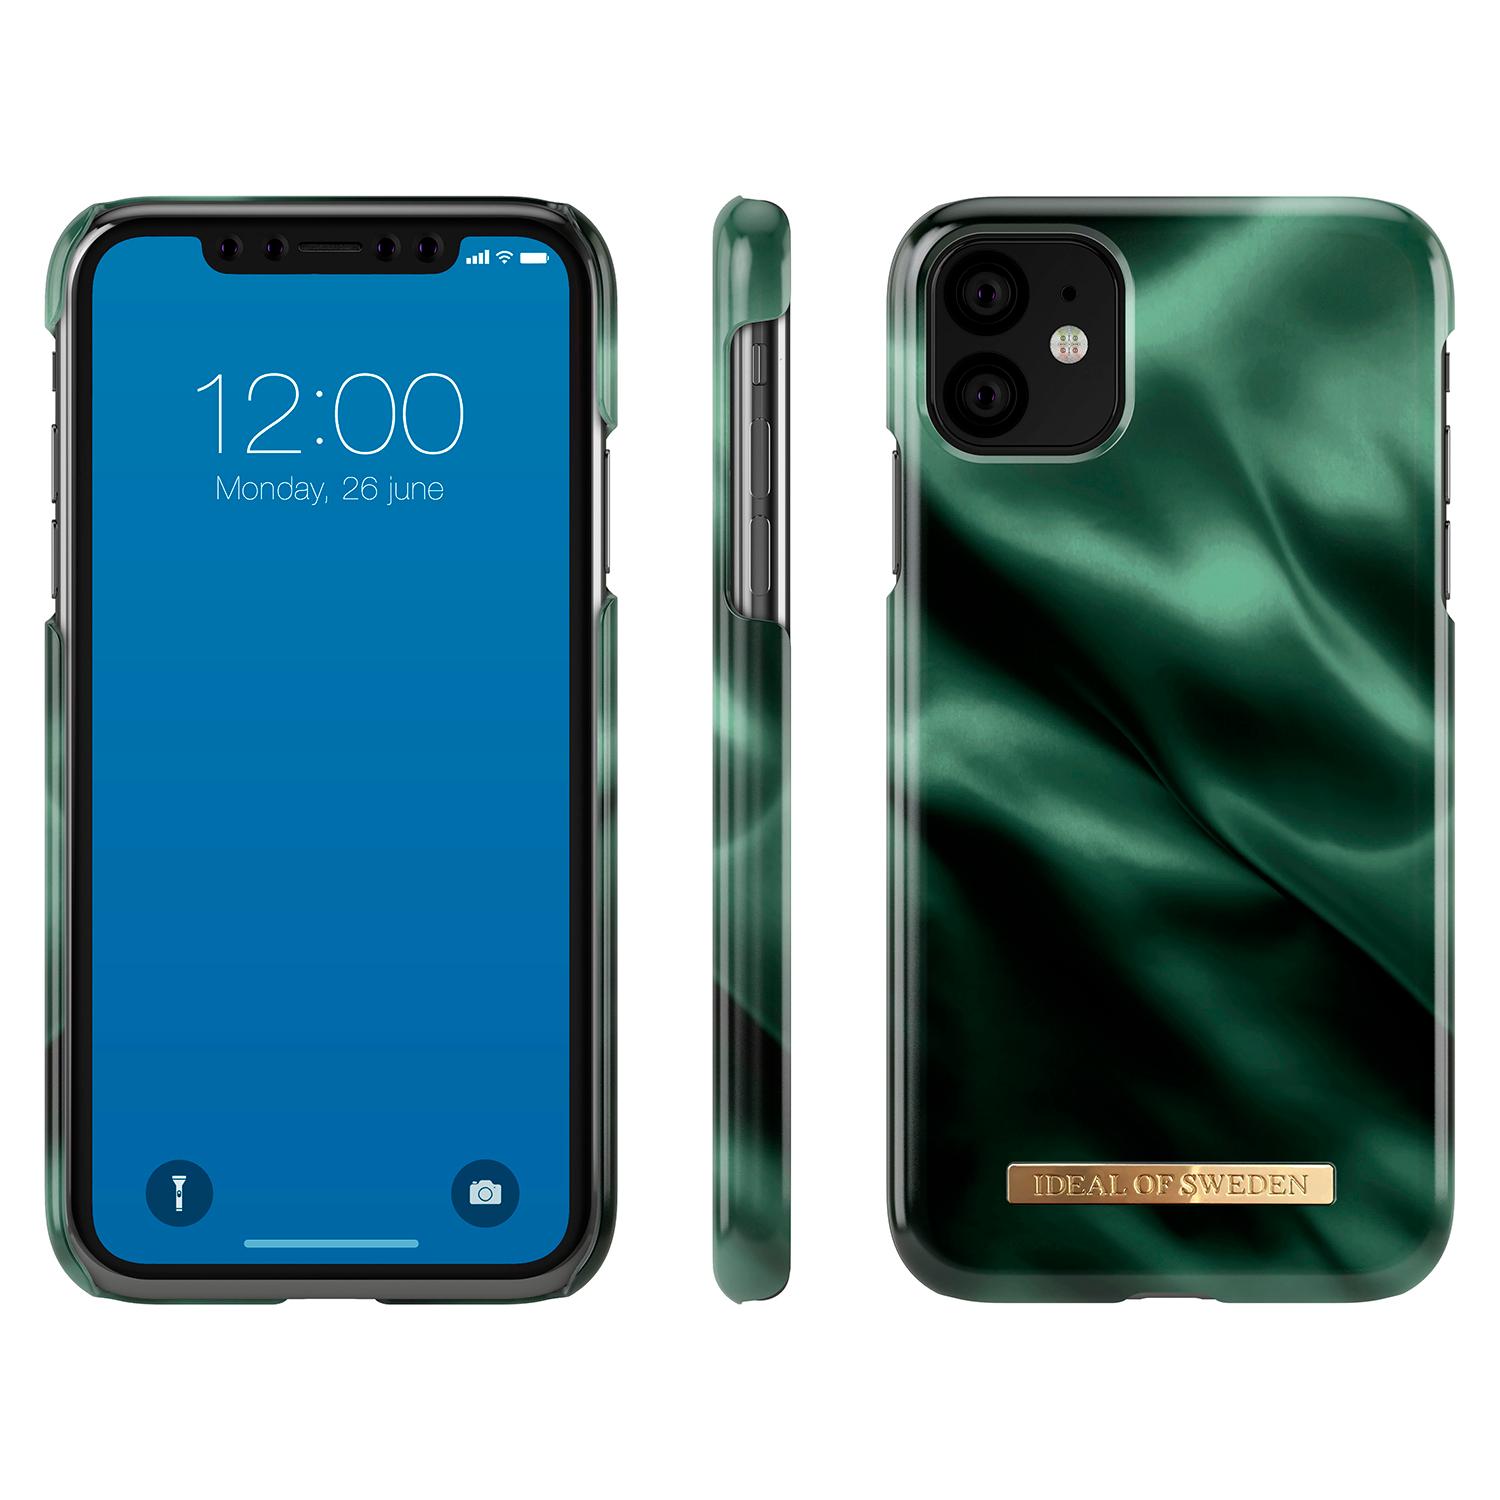 Fashion Case iPhone 11/XR Emerald Satin